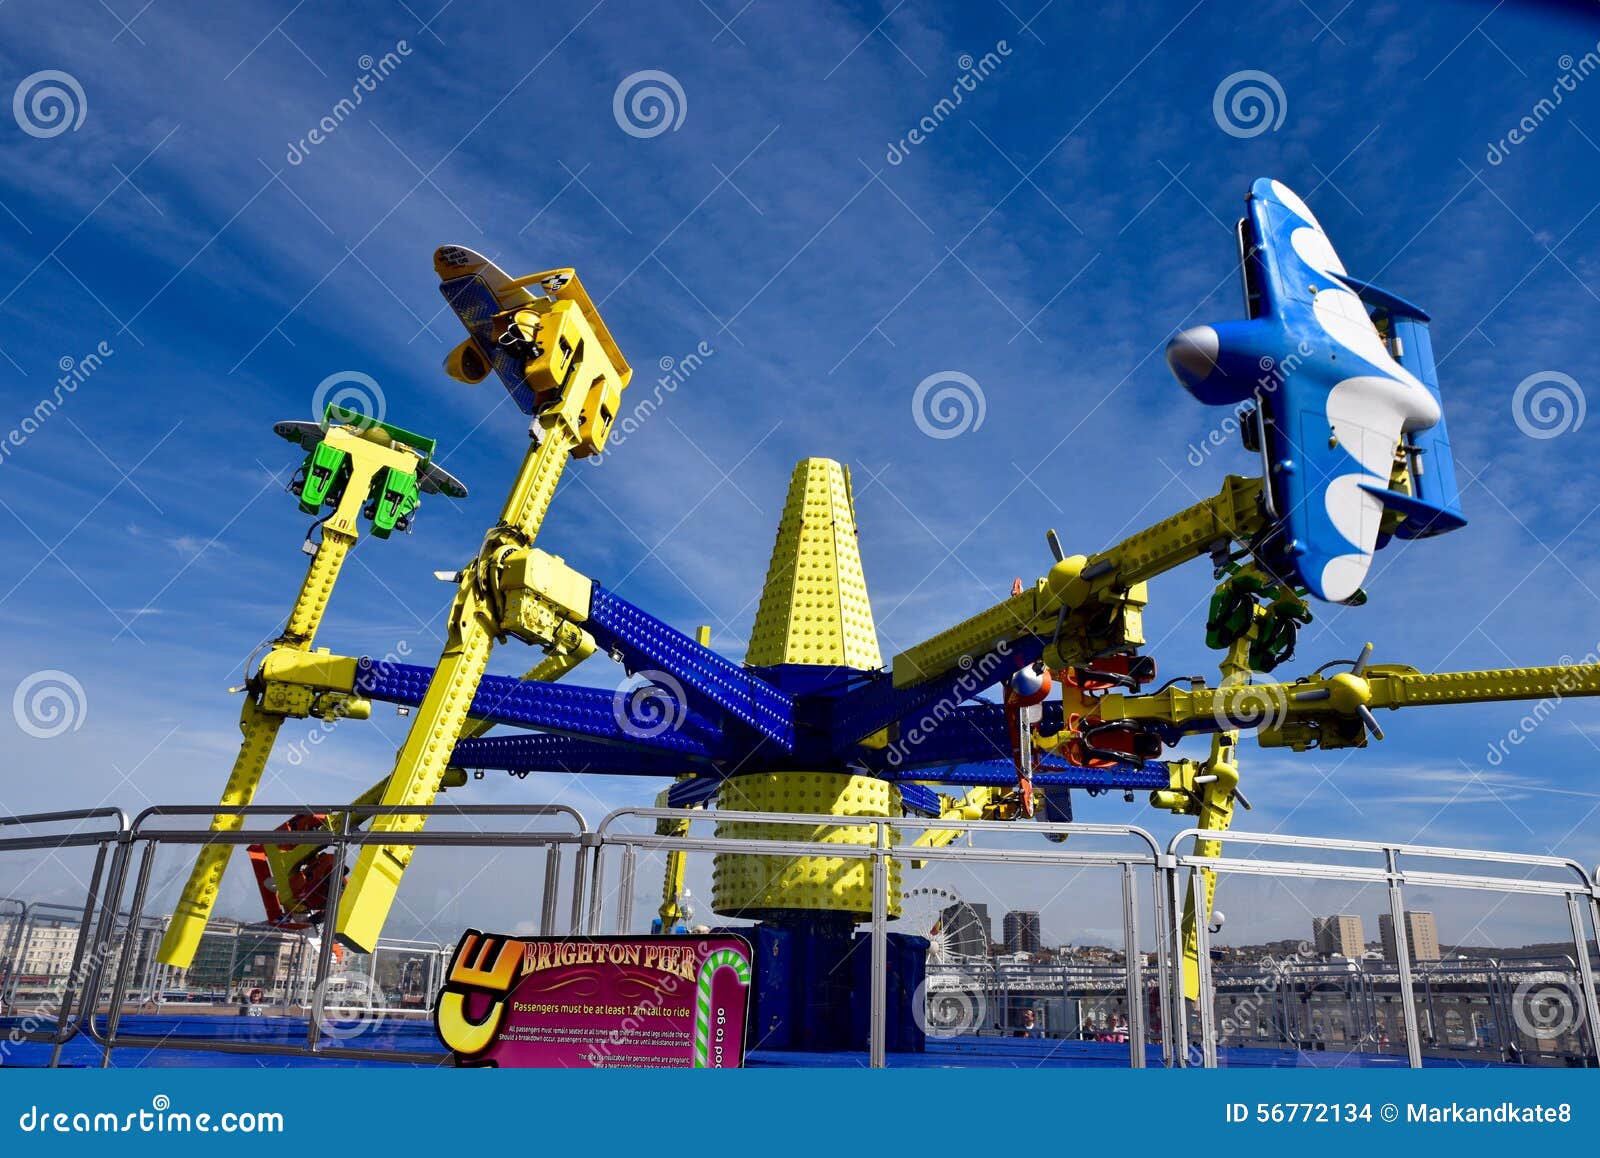 Amusement Park Ride On Brighton Beach Pier Stock Photo Image Of Vacation Blue 56772134